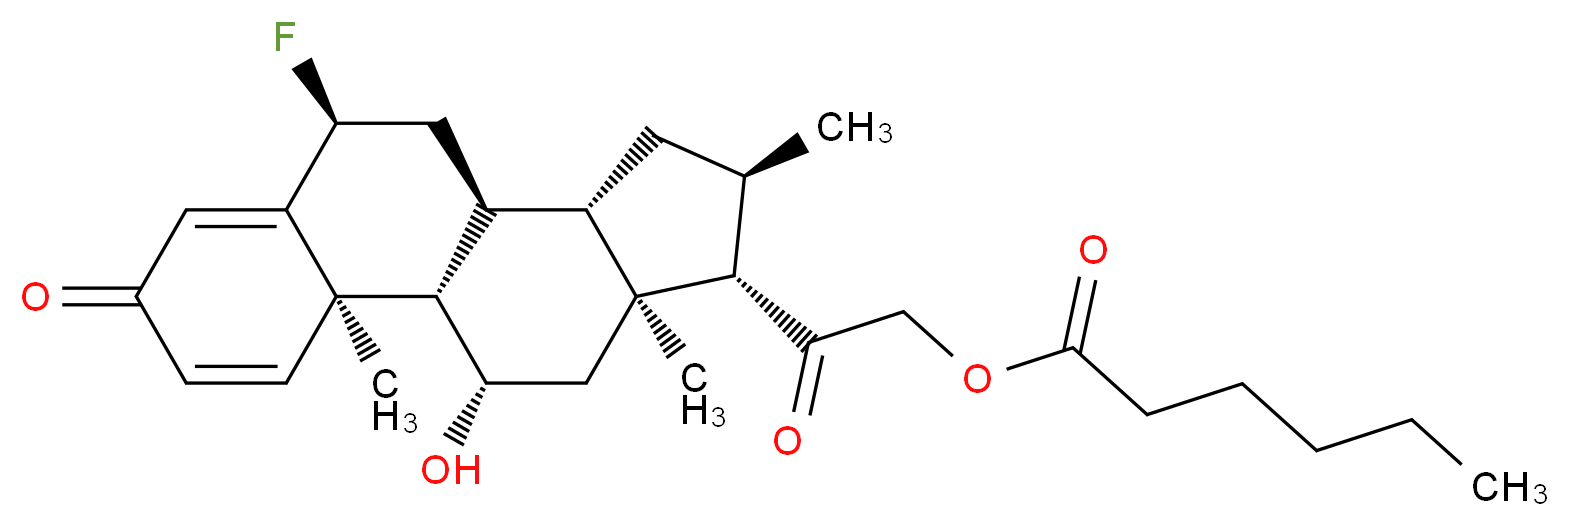 CAS_303-40-2 molecular structure